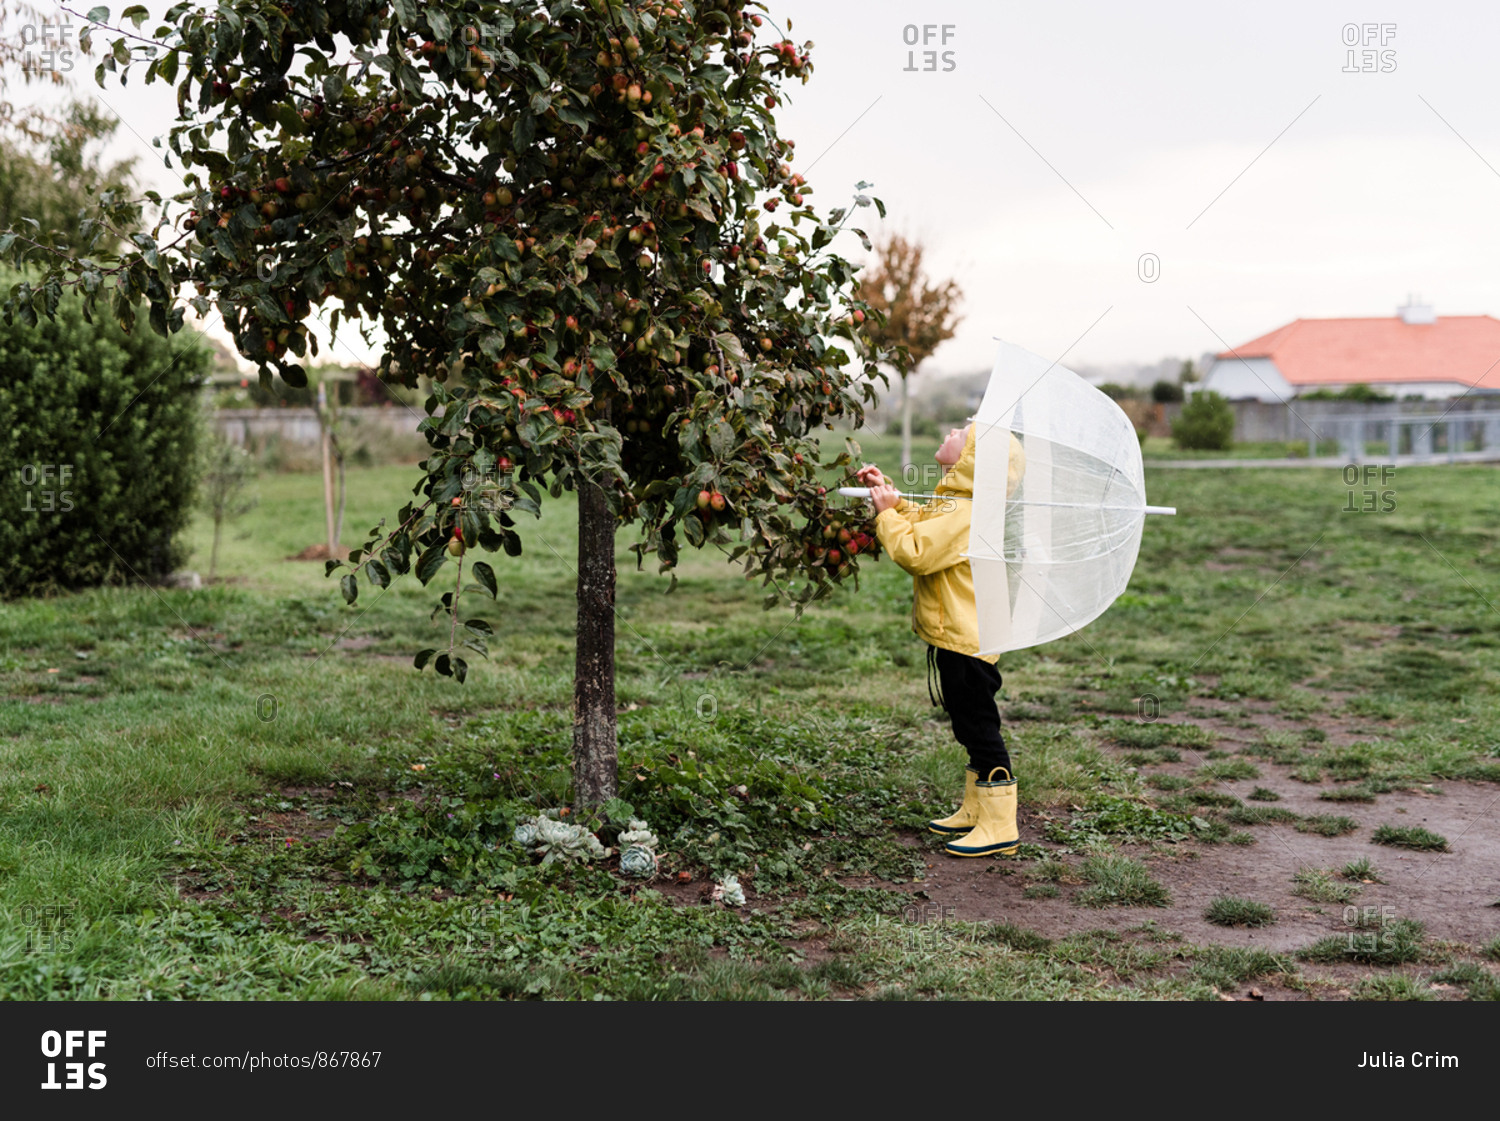 Cute boy picking apples in the rain